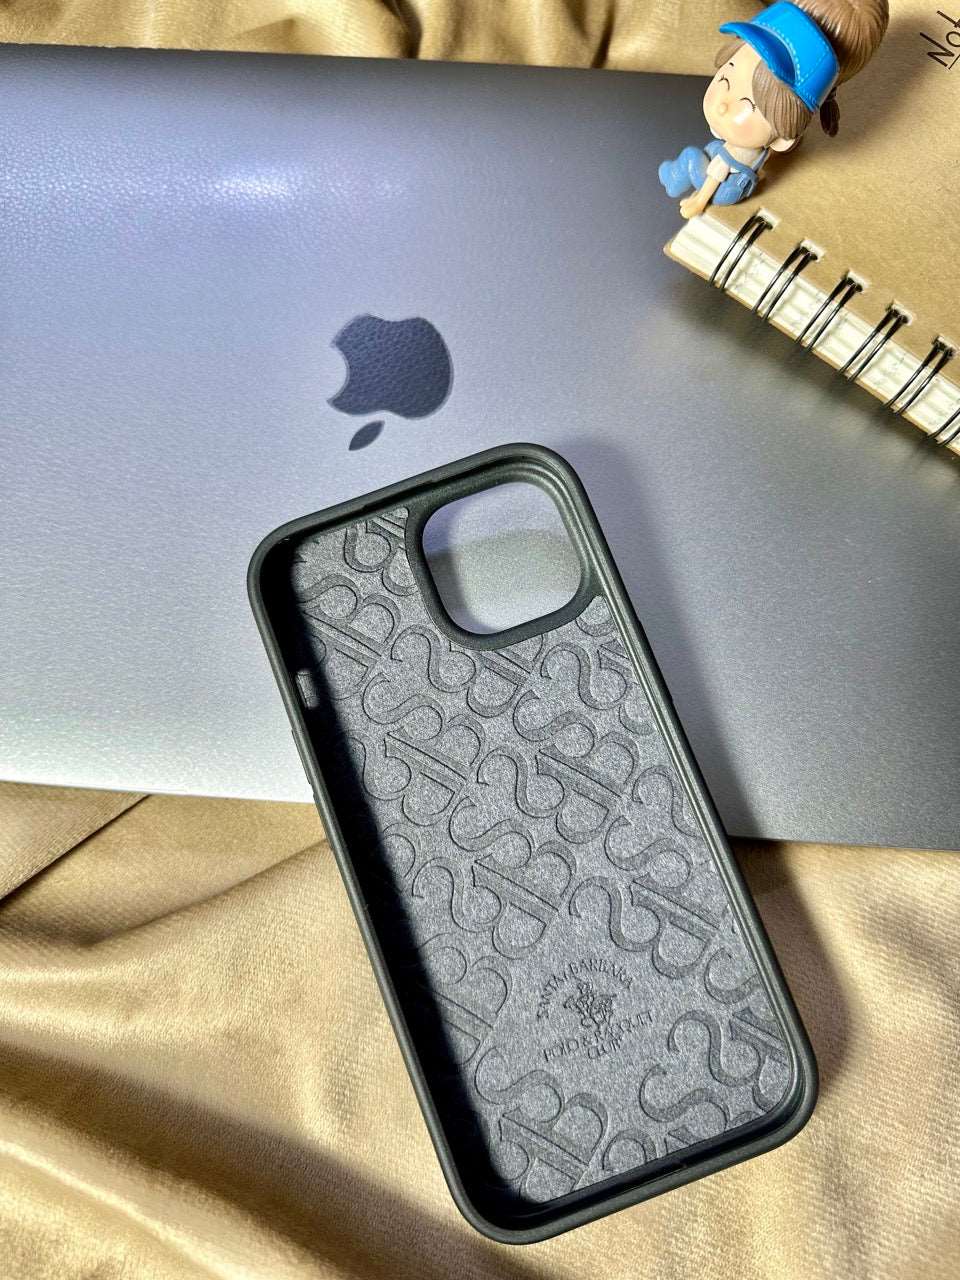 Apple iPhone 15 Santa Barbara Polo & Racquet Club ® Luxury Savana Series Leather Case for iPhone 15 - Tiger